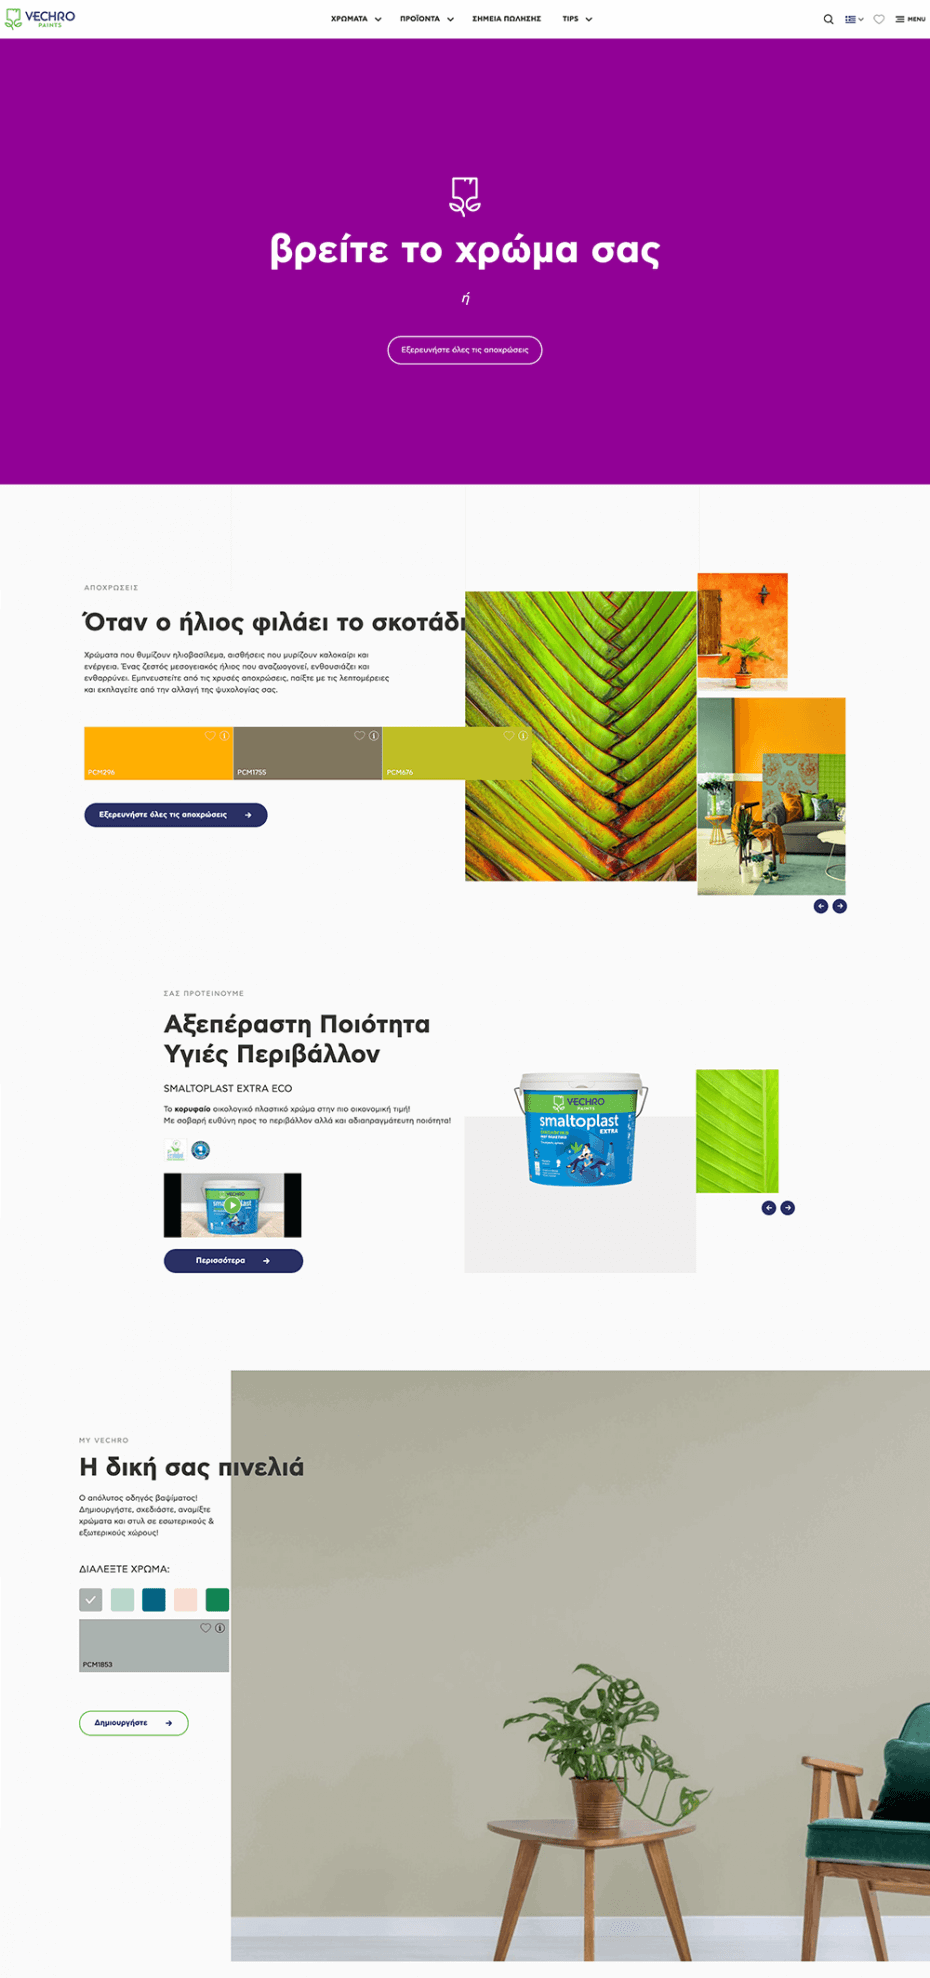 Vechro’s corporate Website: Color bombed UX & UI design